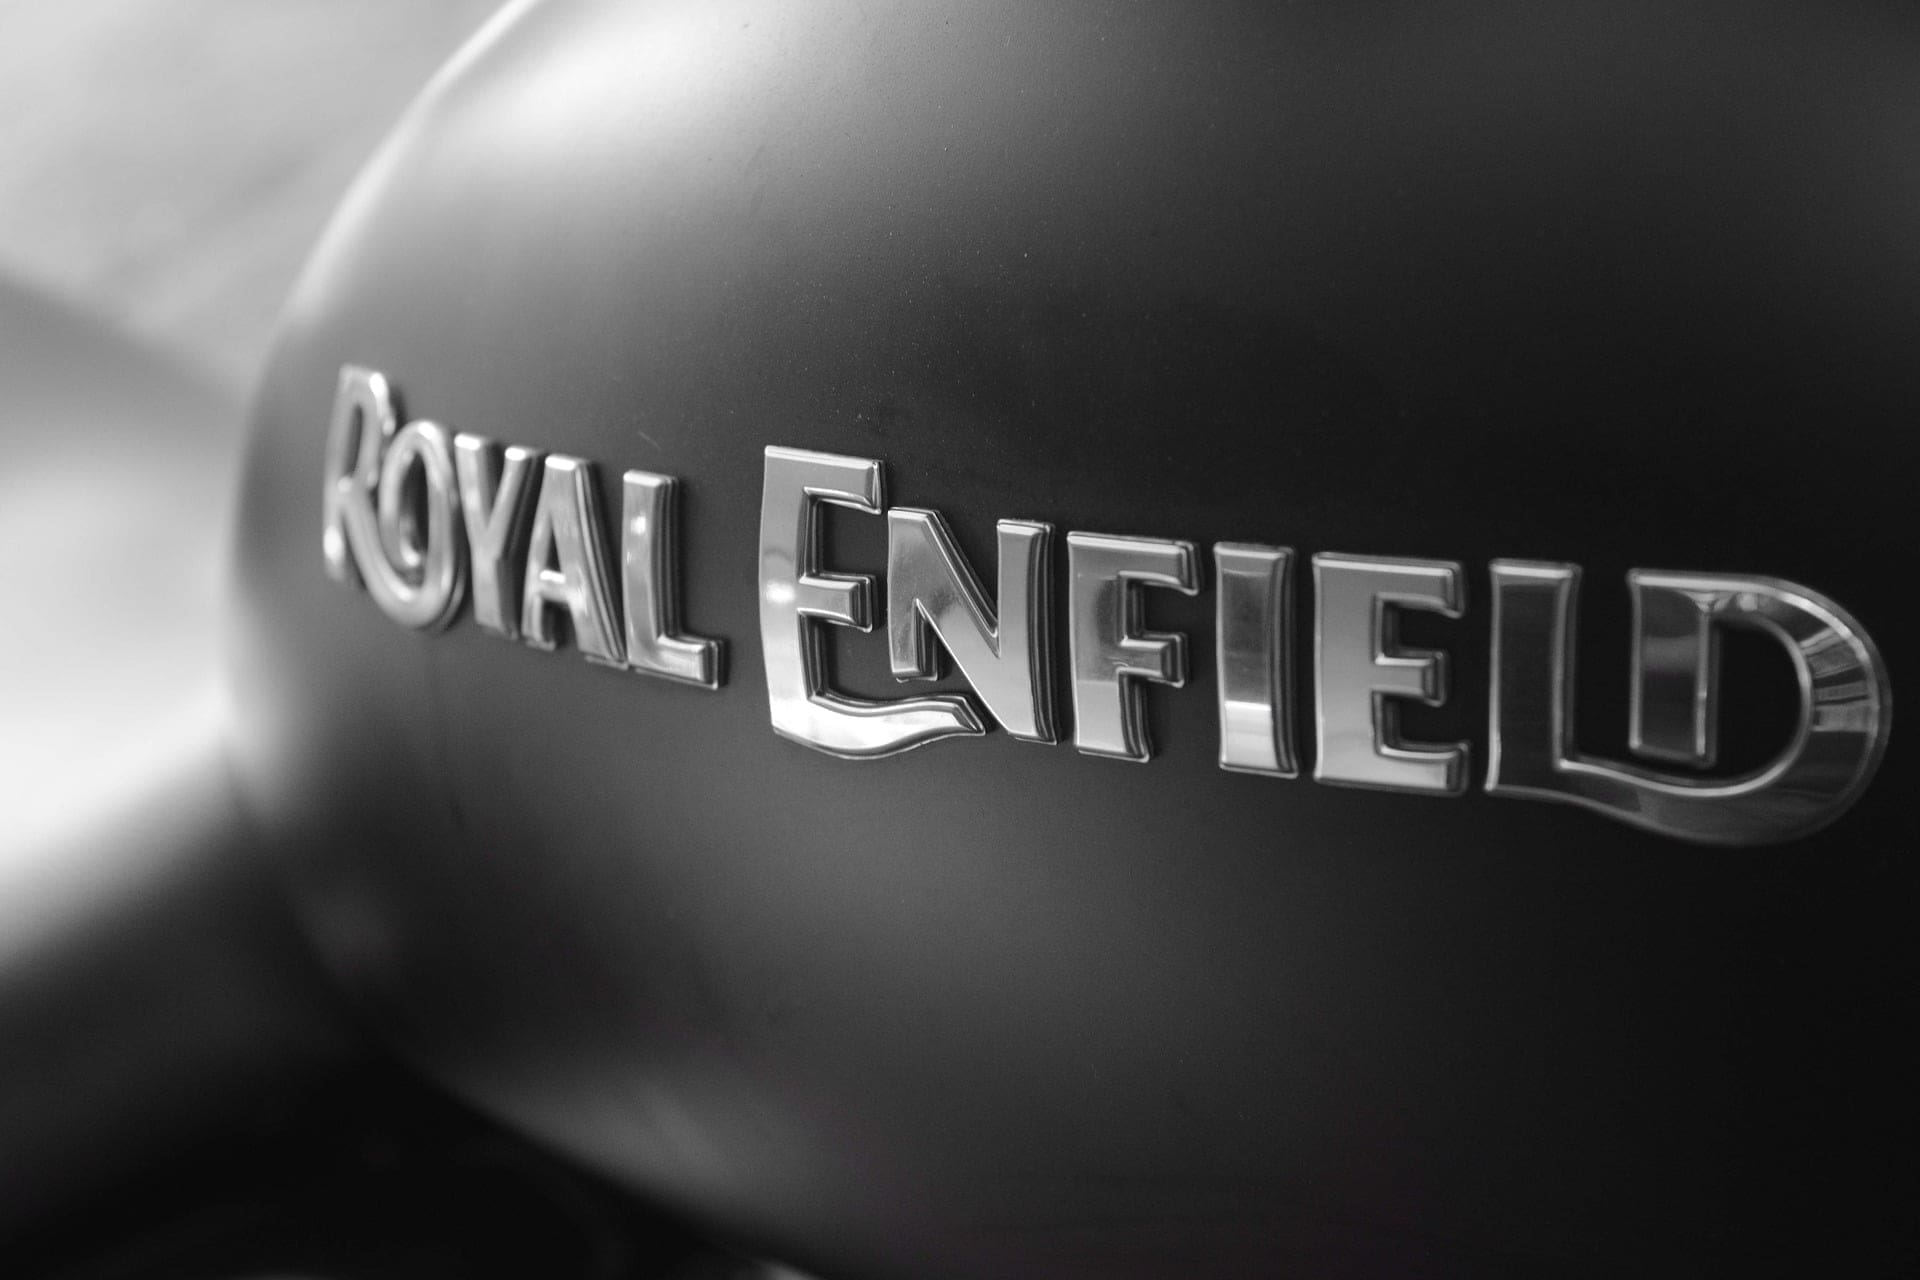 Royal Enfield Price In Nepal 2021